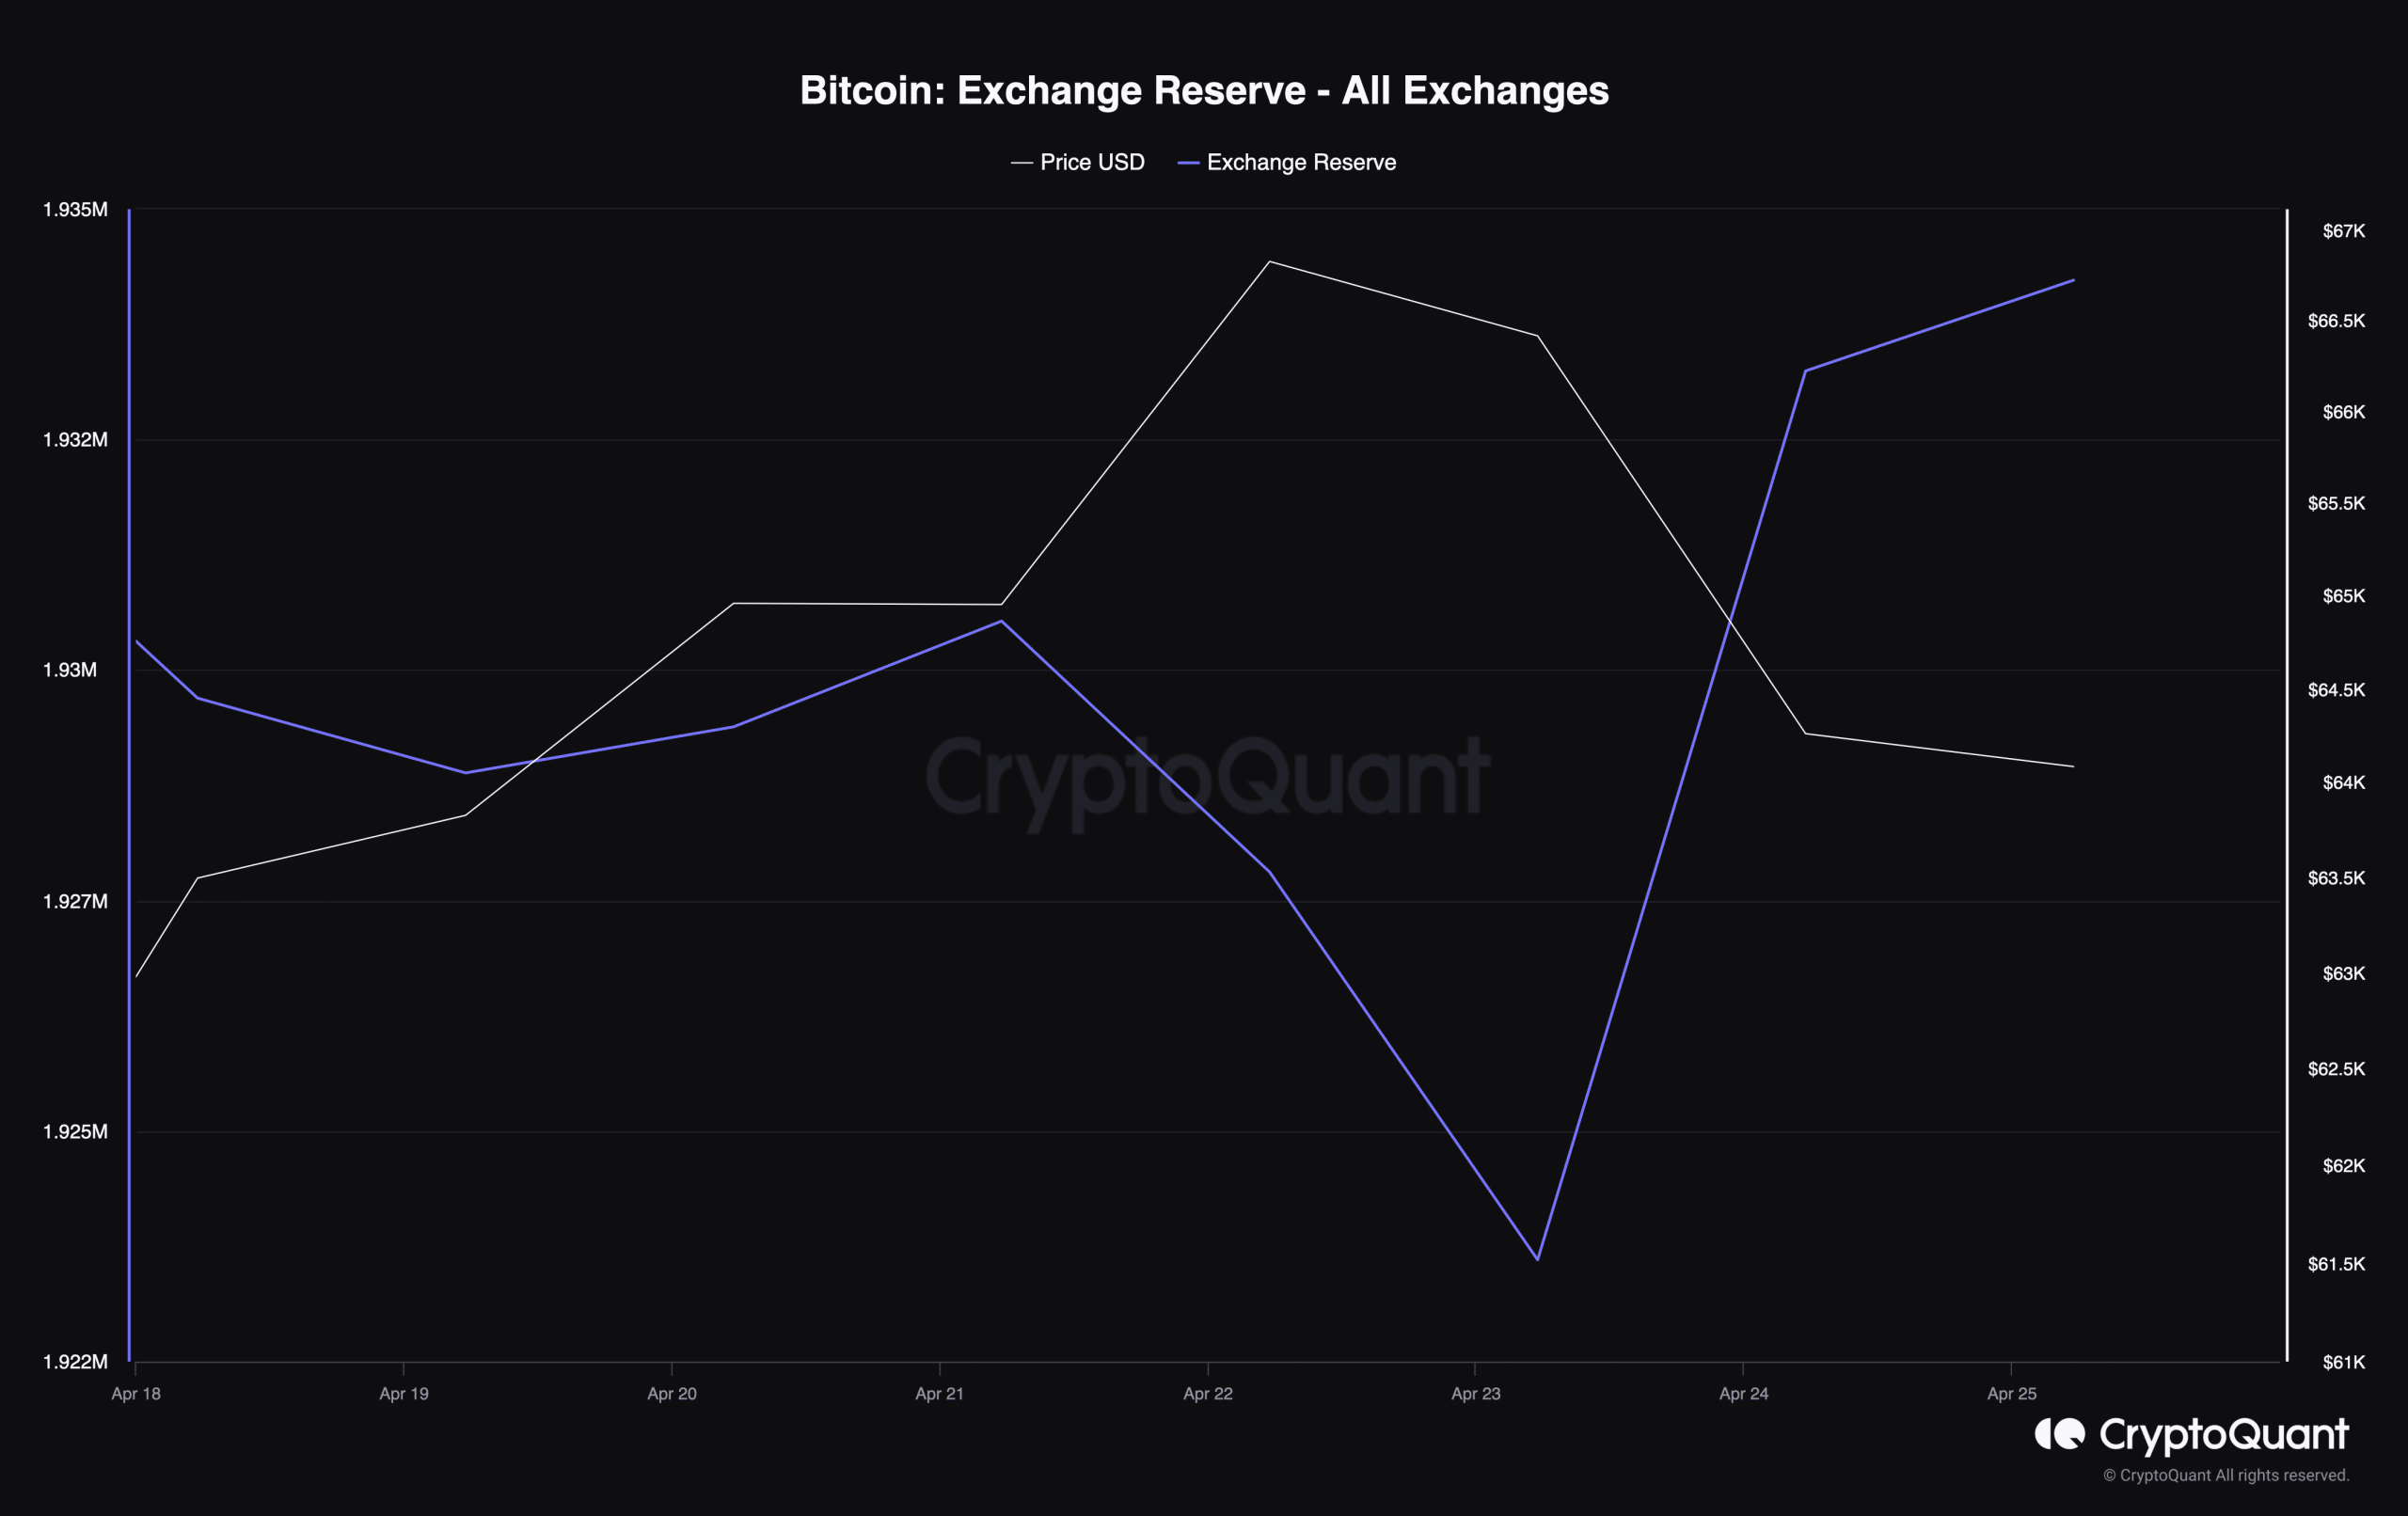 Bitcoin's exchange reserve increased